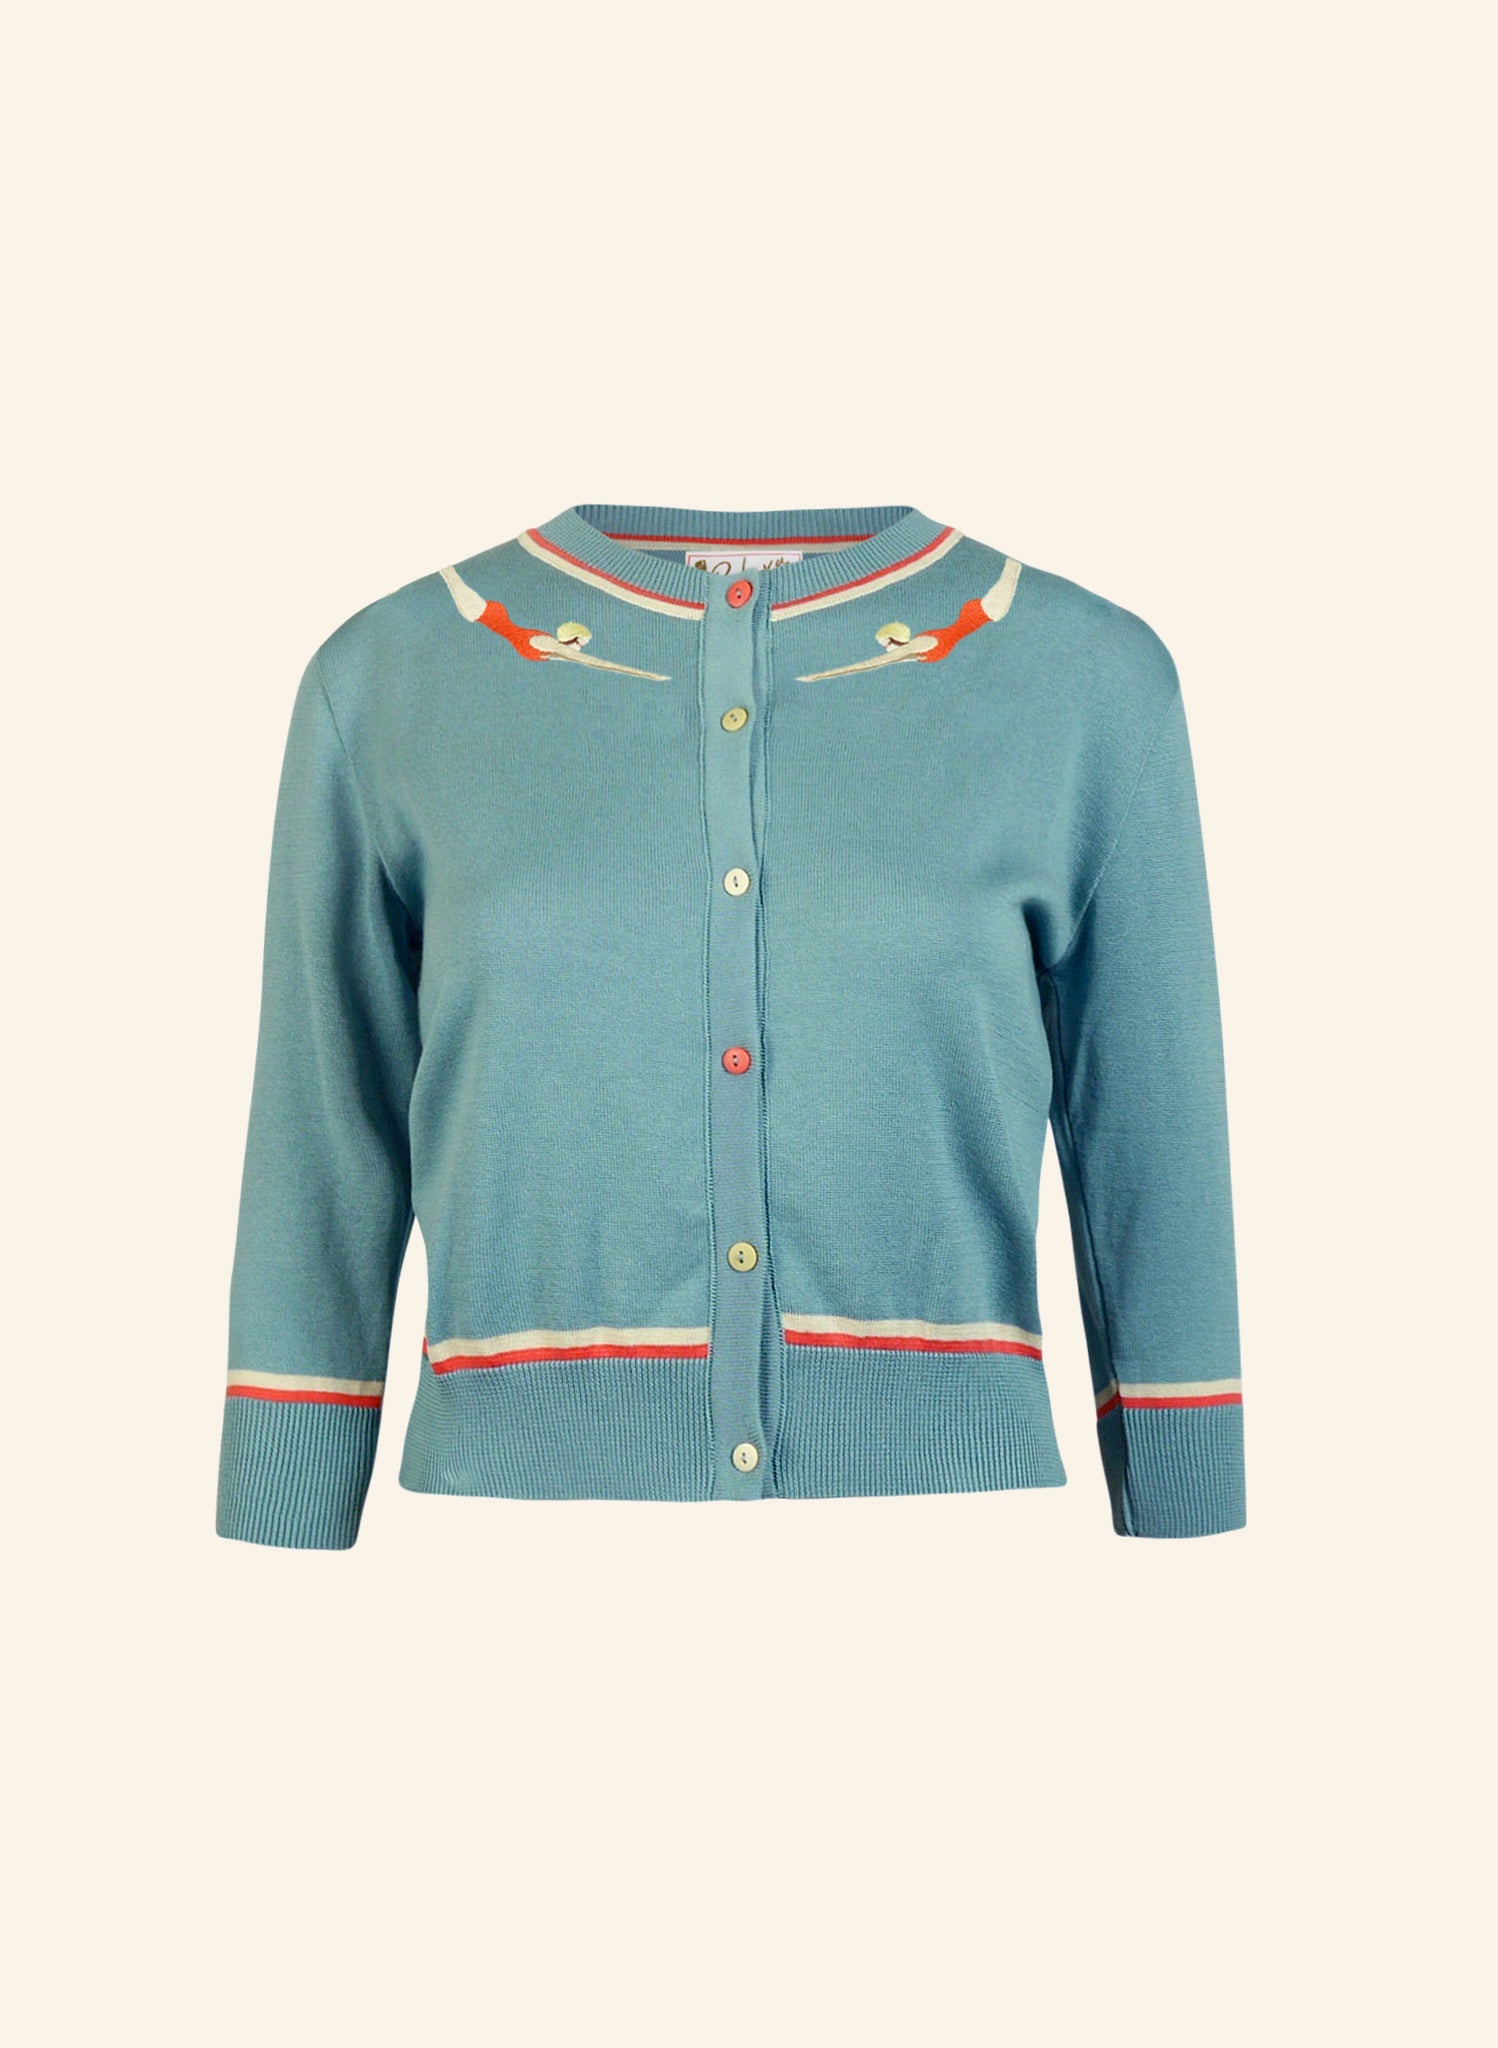 100% Organic Cotton Teal Cardigan | Embroidered Divers | Palava